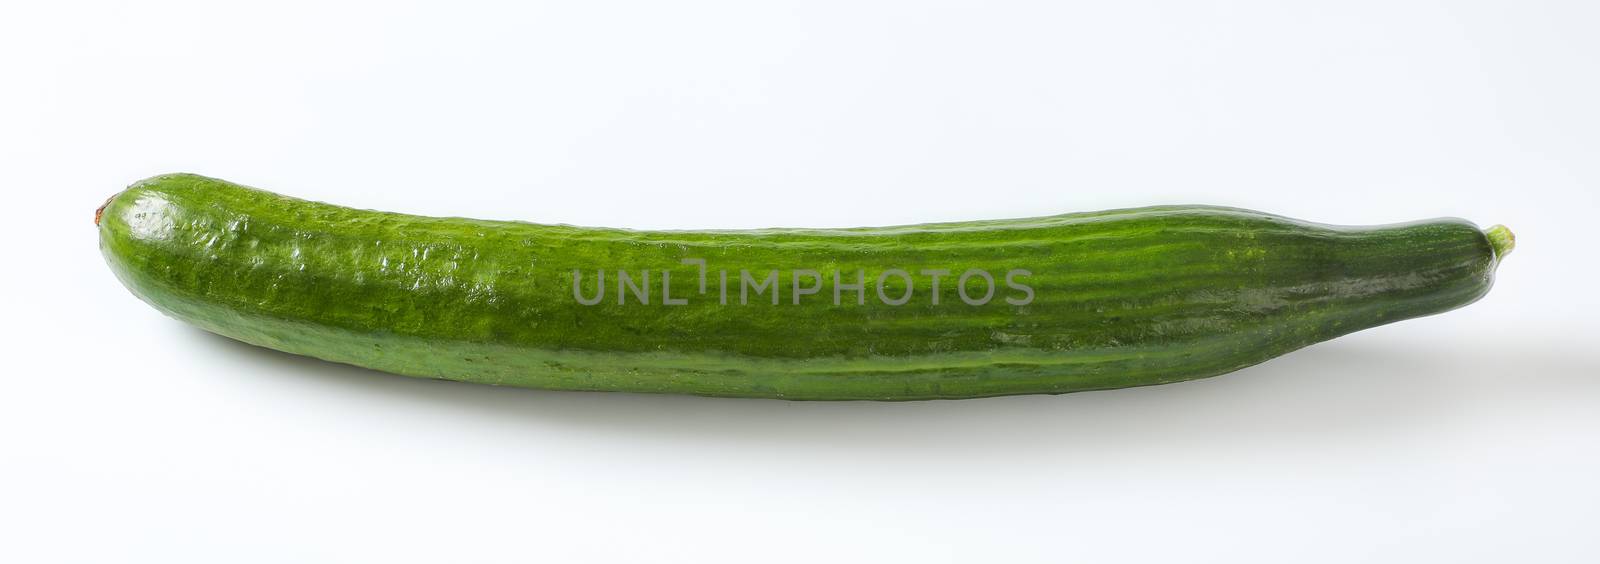 single long cucumber on white background - close up